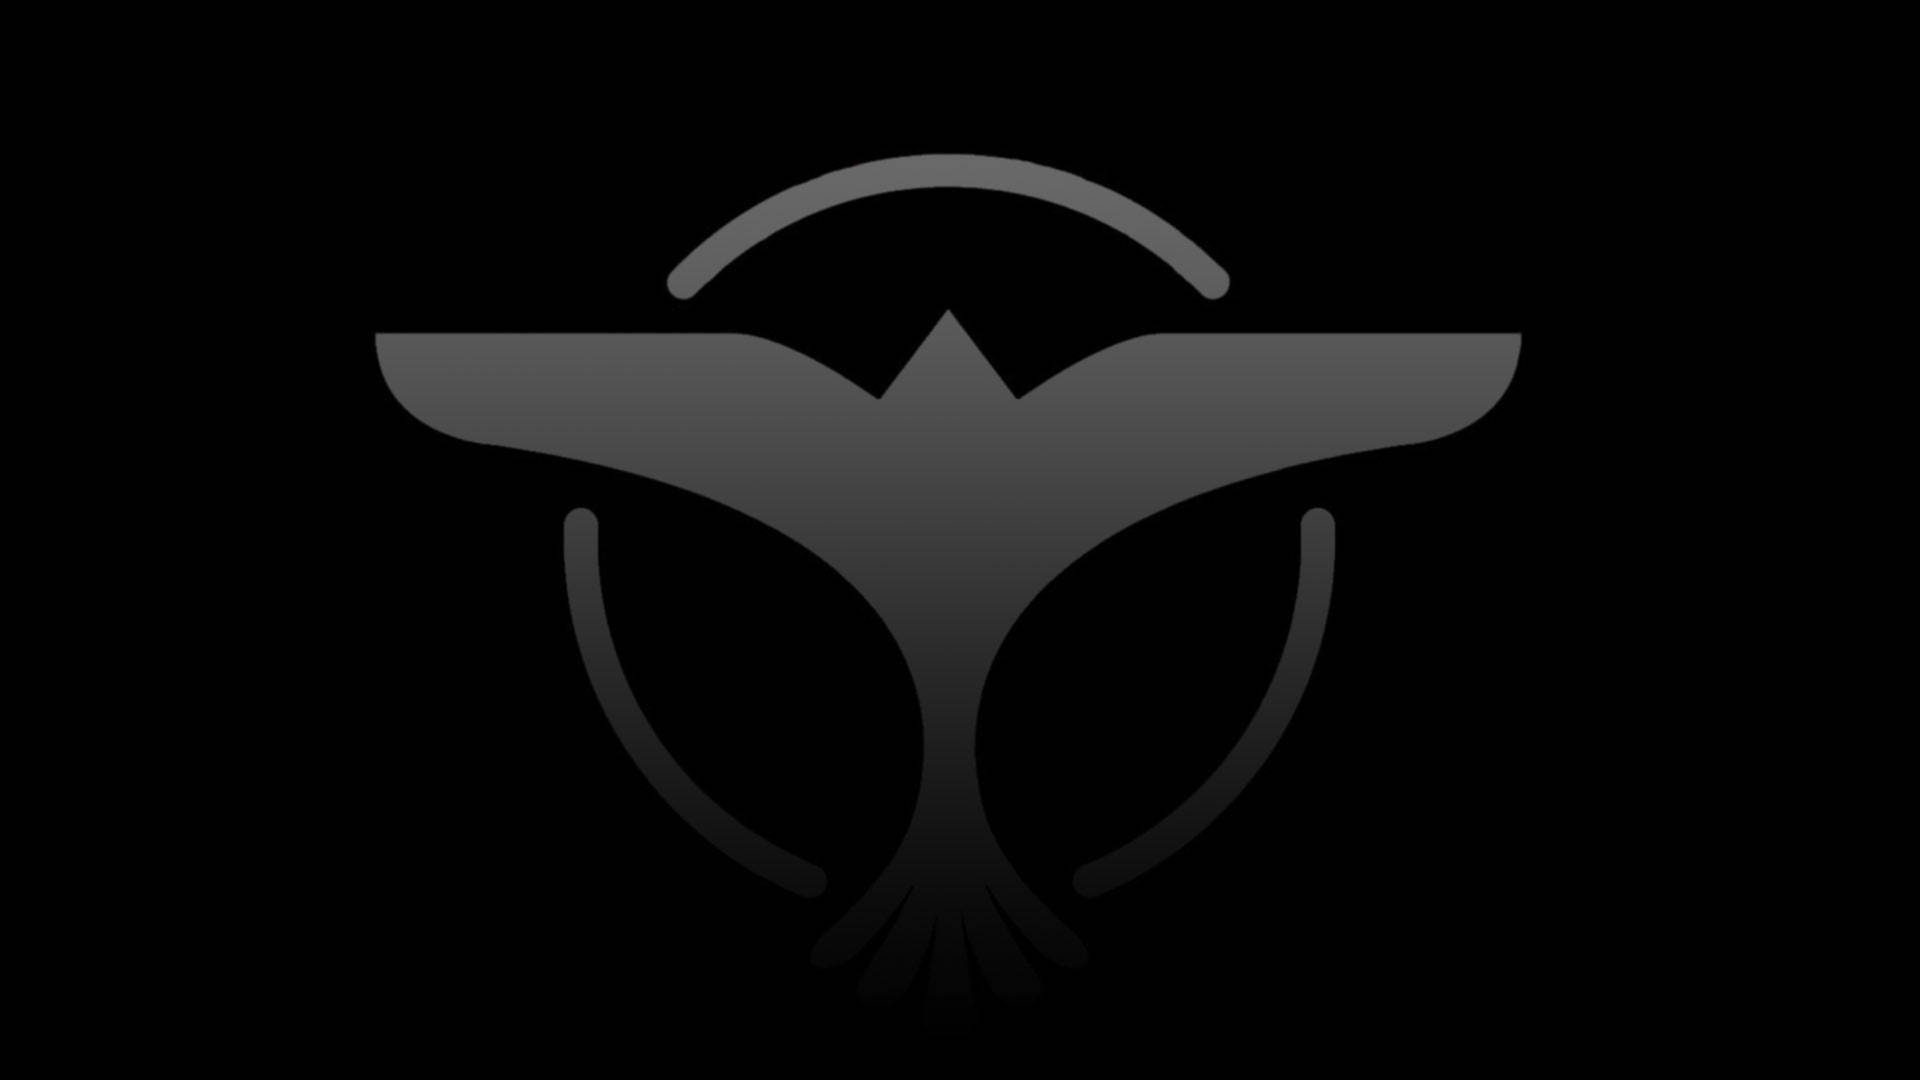 Legendary Dj Tiesto With His Signature Bird Emblem